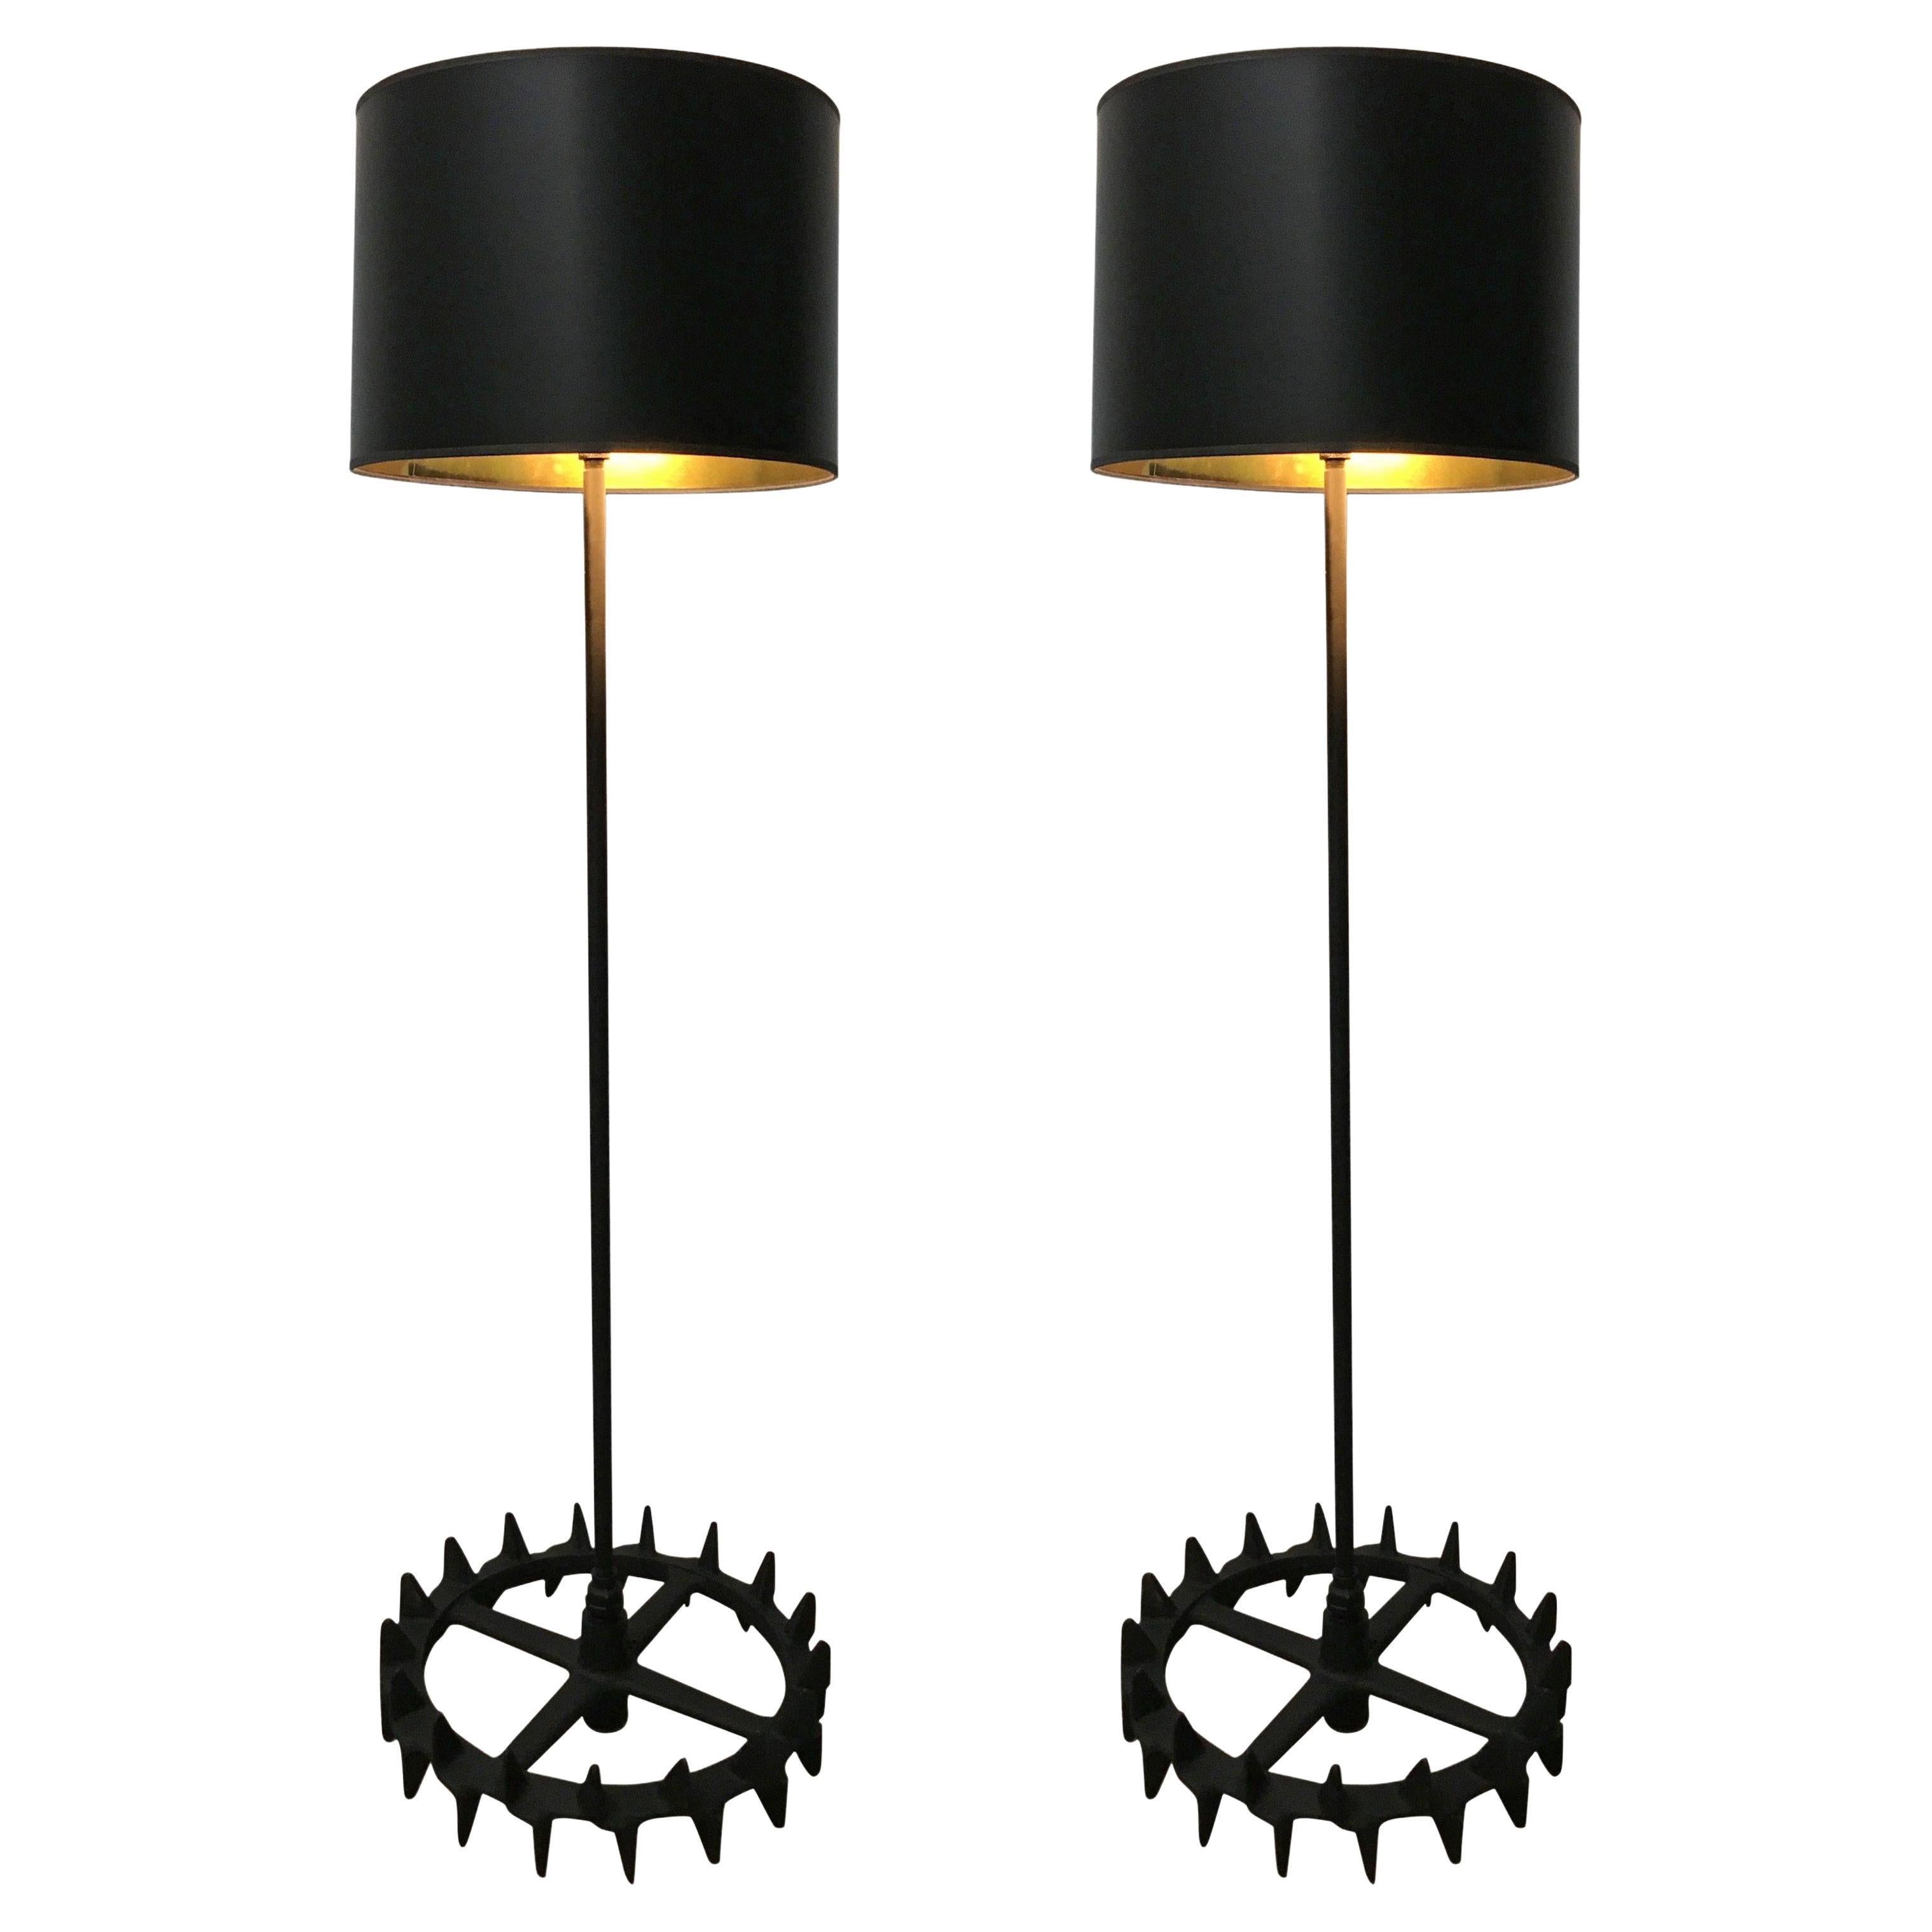 Pair of Industrial Iron Gear Floor Lamps